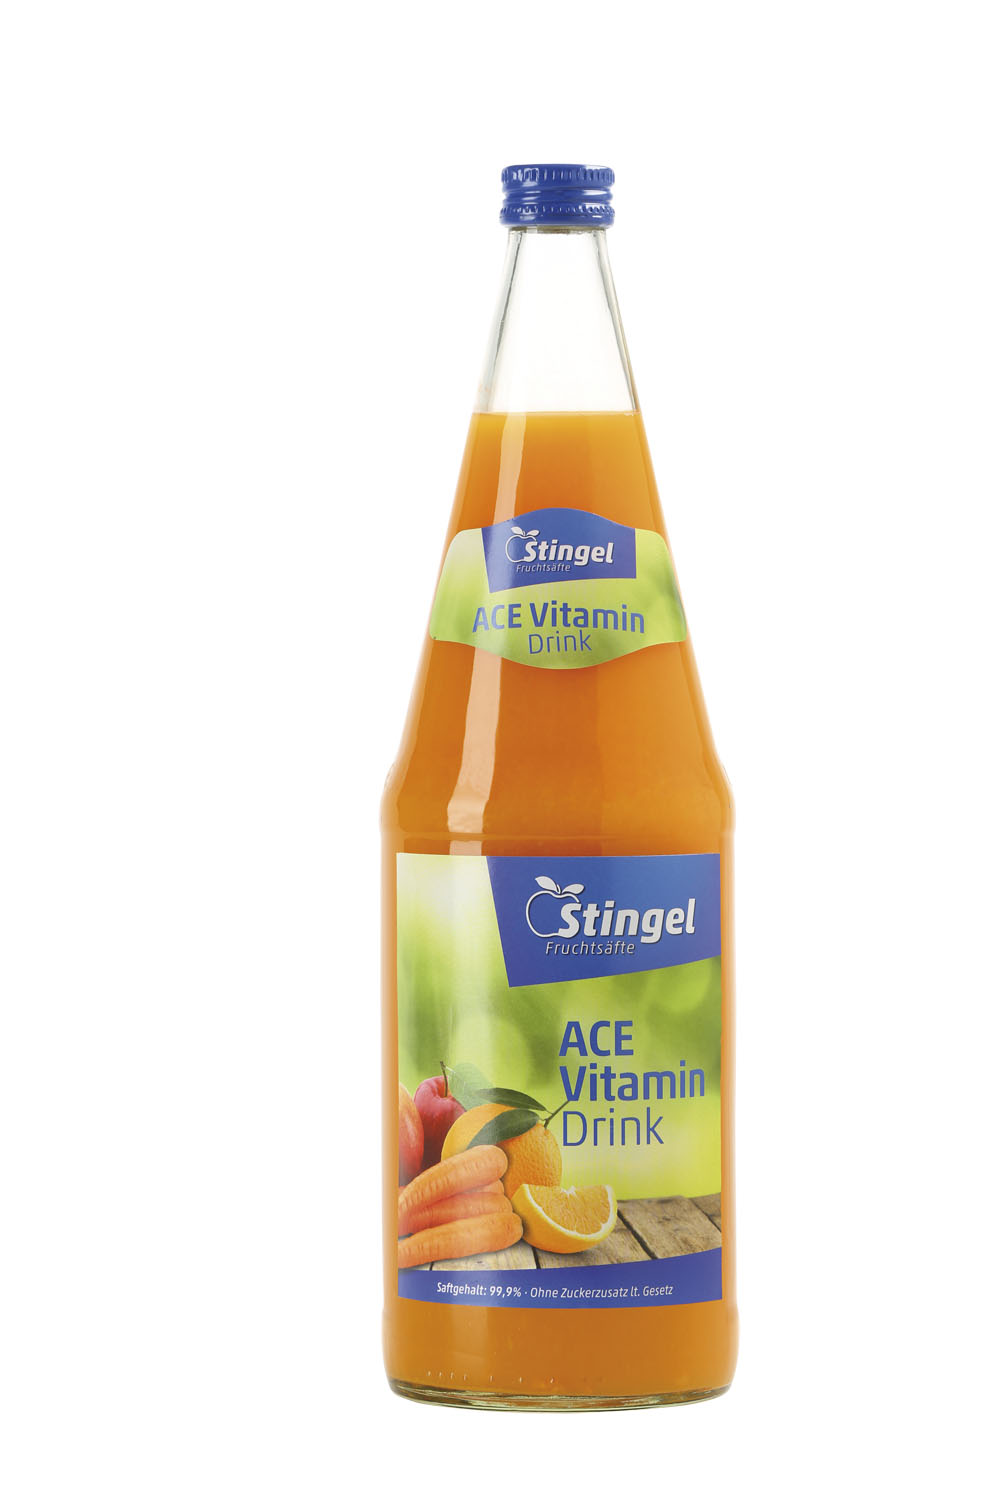 Stingel Ace Vitamin Drink